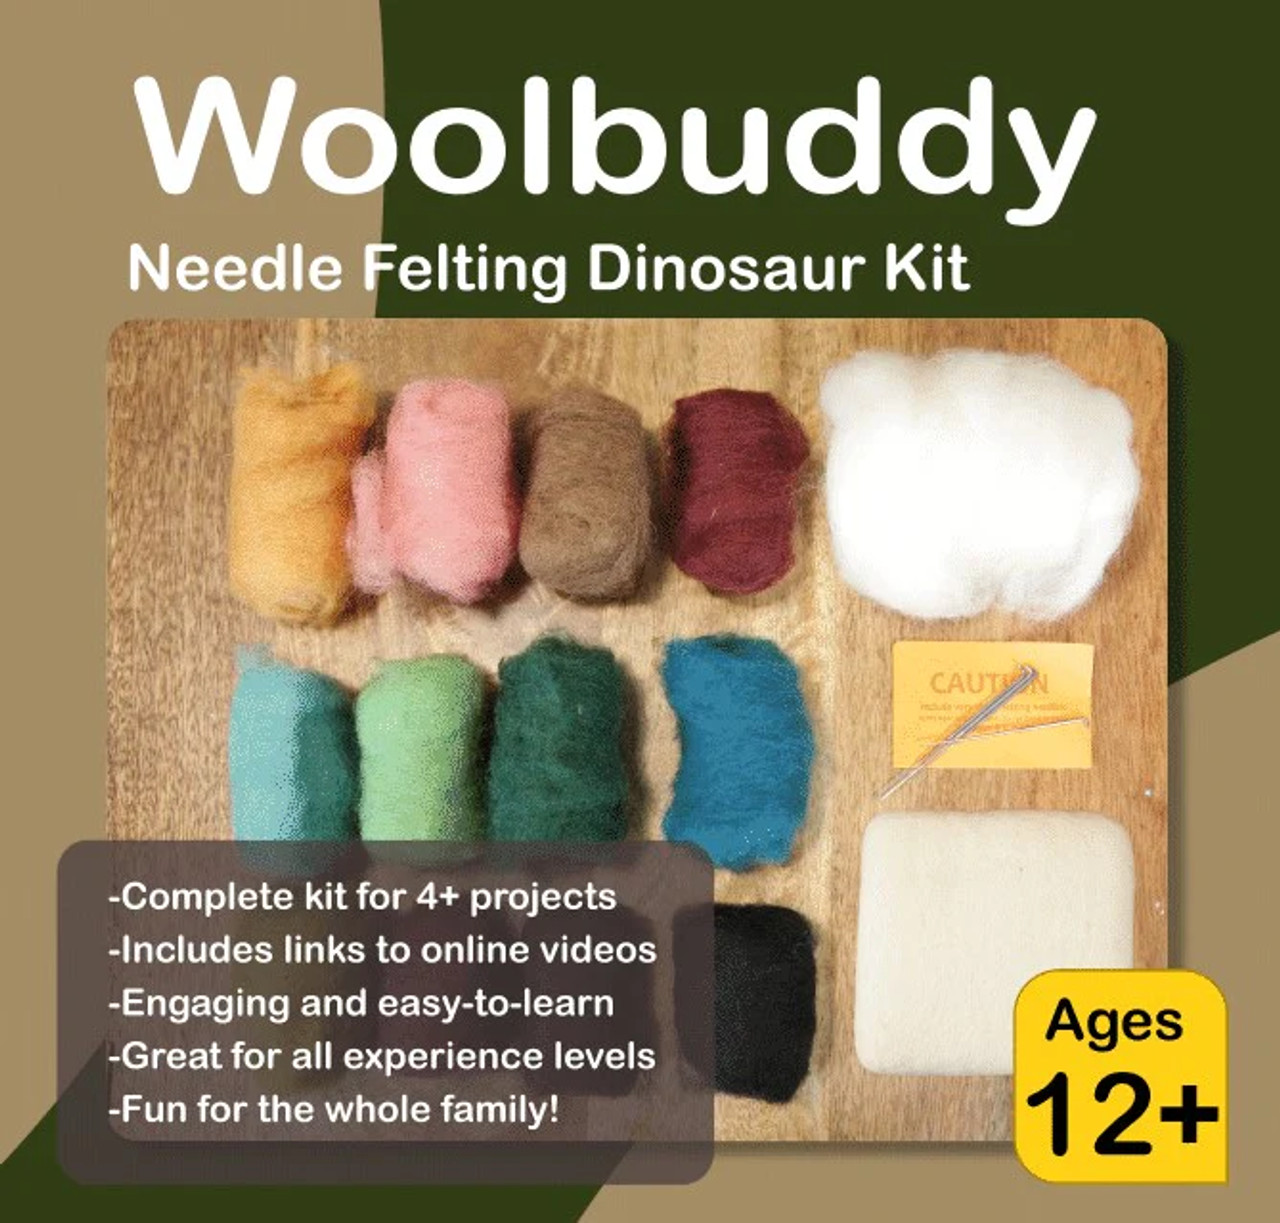 Woolbuddy Dinosaur Needle Felting Kit – StevenBe